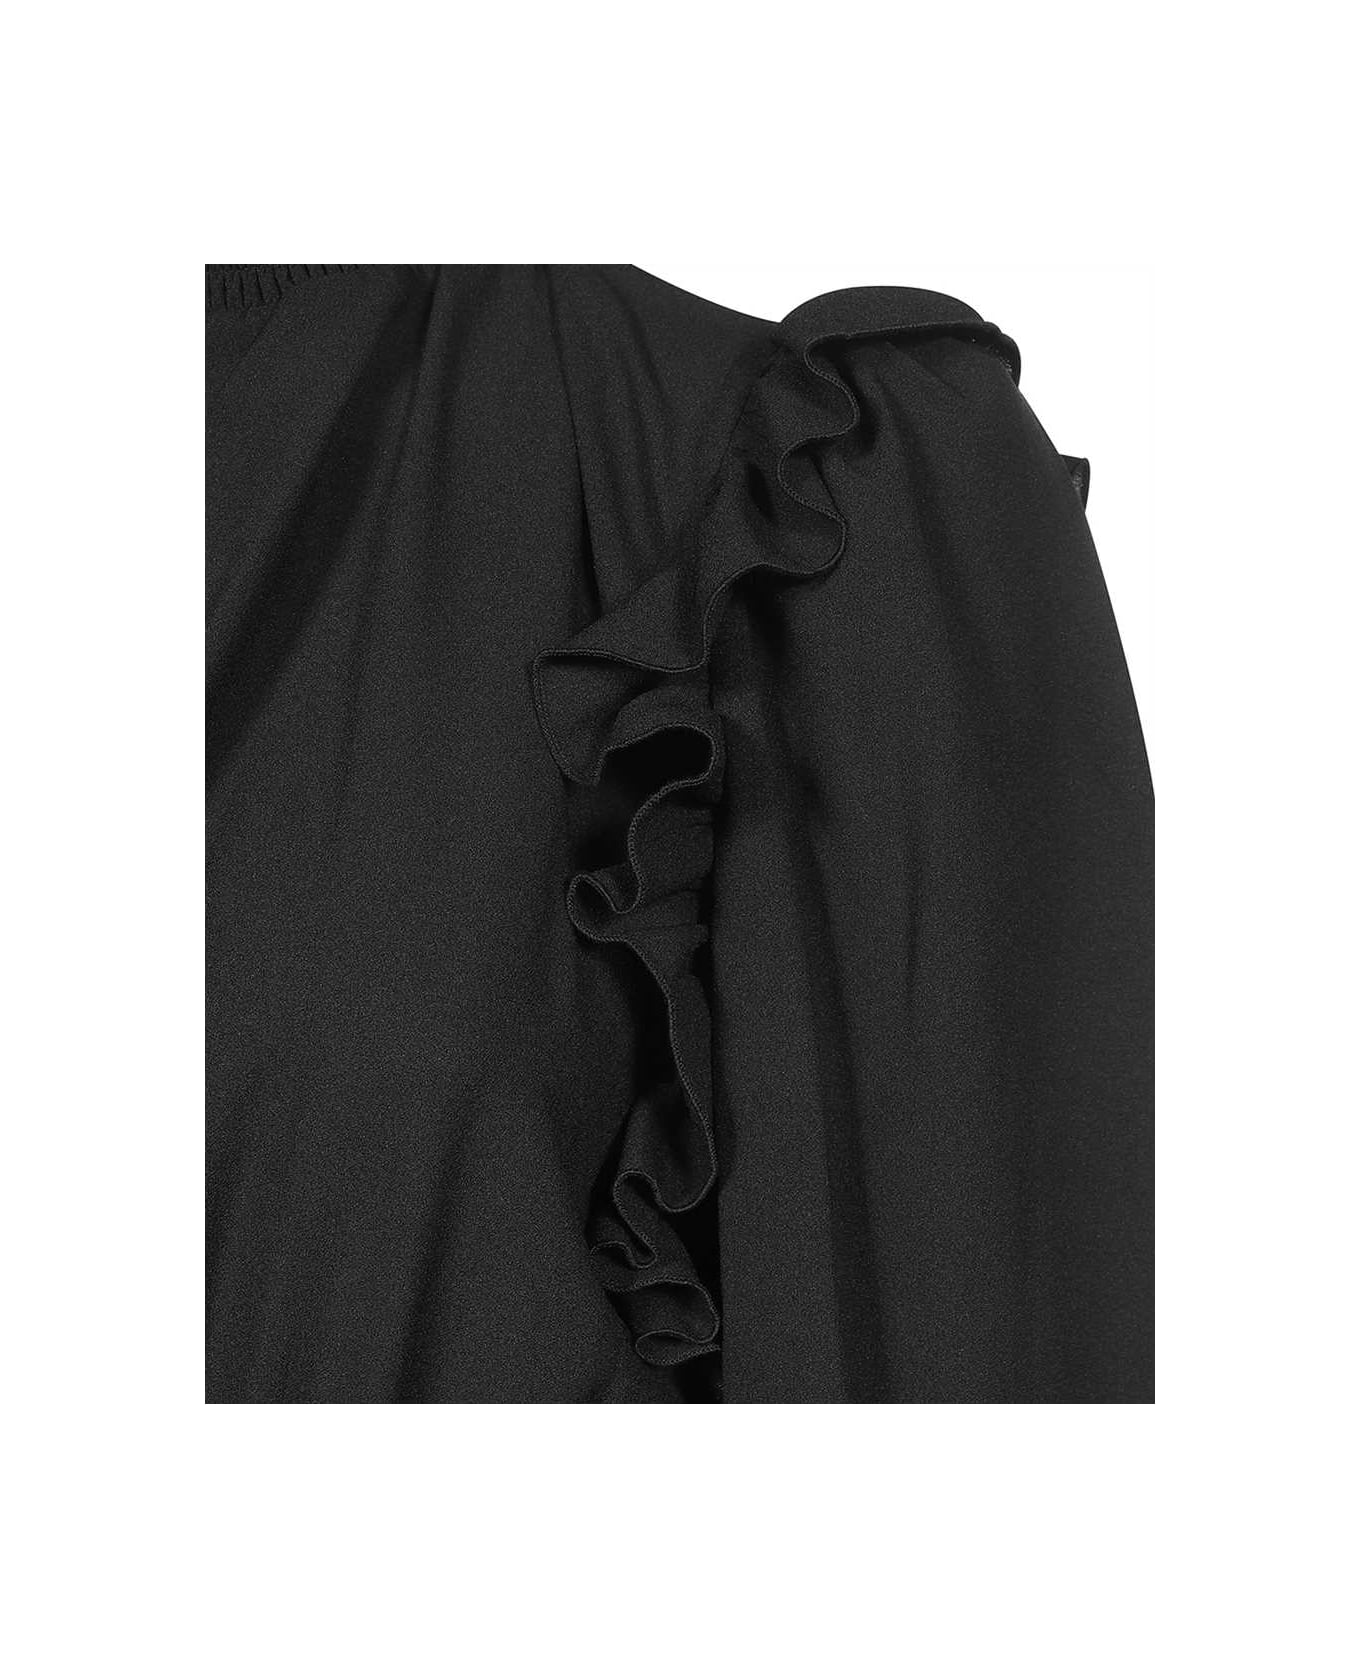 Versace Jeans Couture Crepe Dress - black